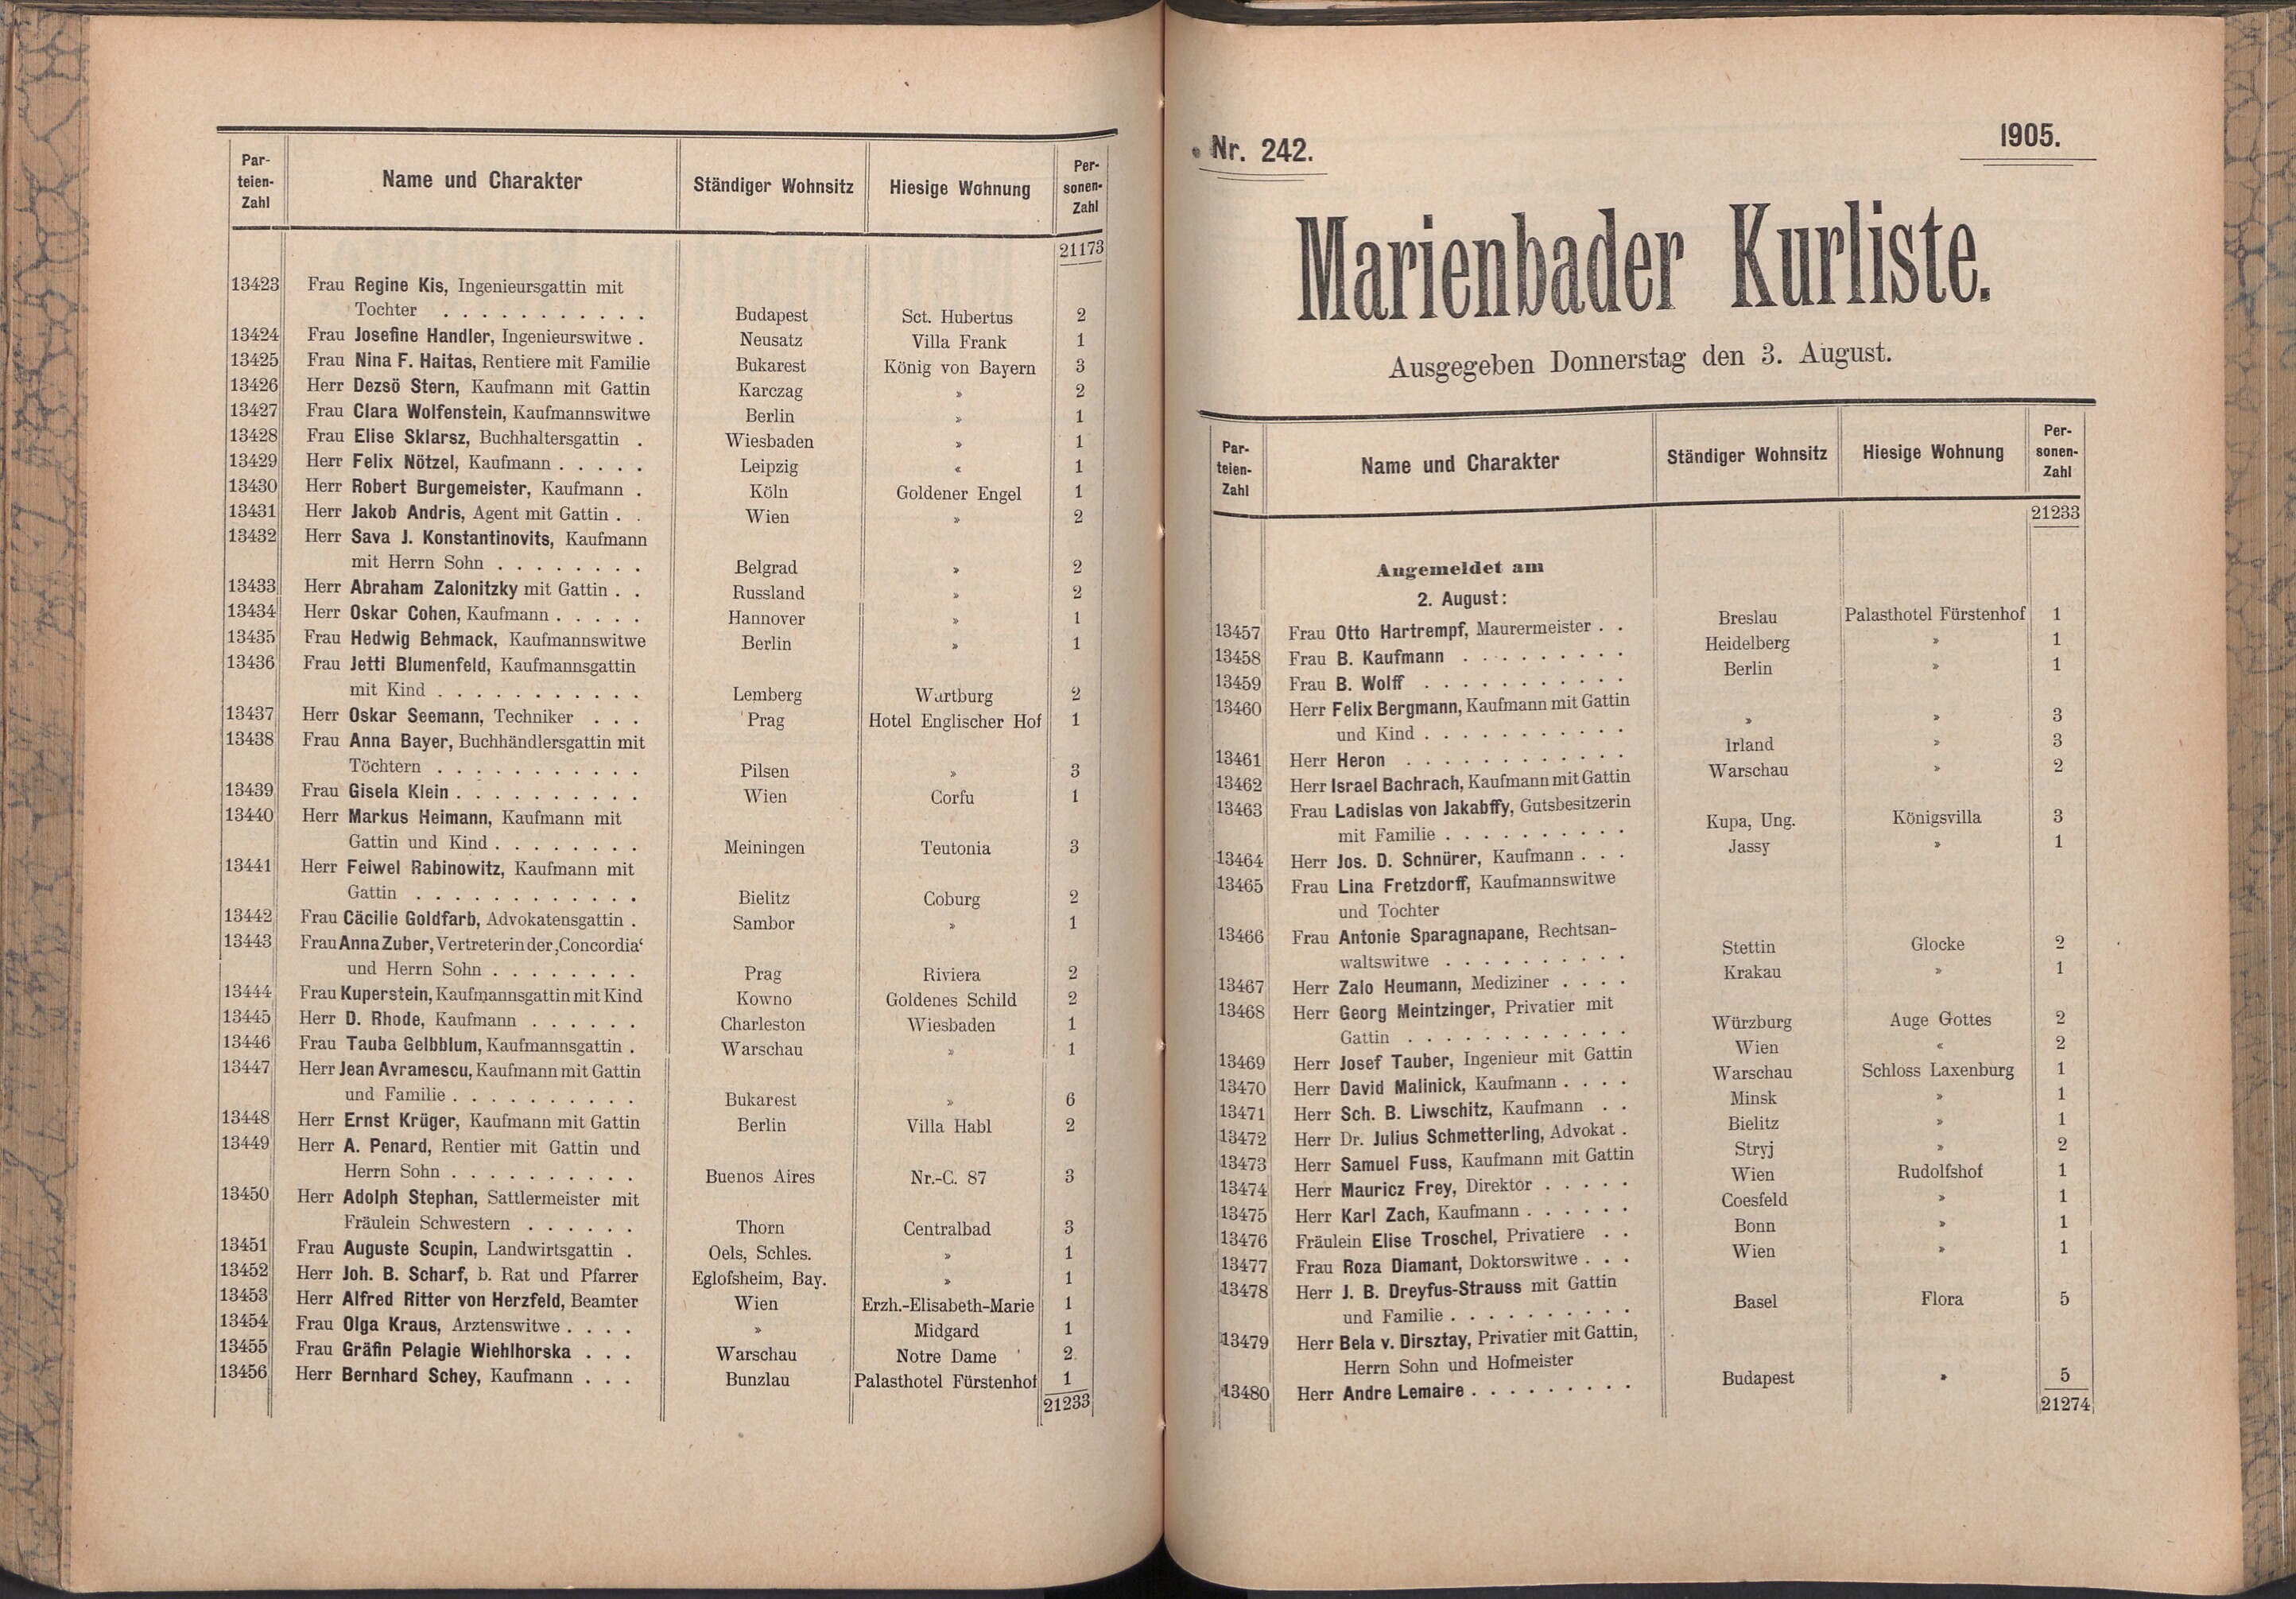 317. soap-ch_knihovna_marienbader-kurliste-1905_3170